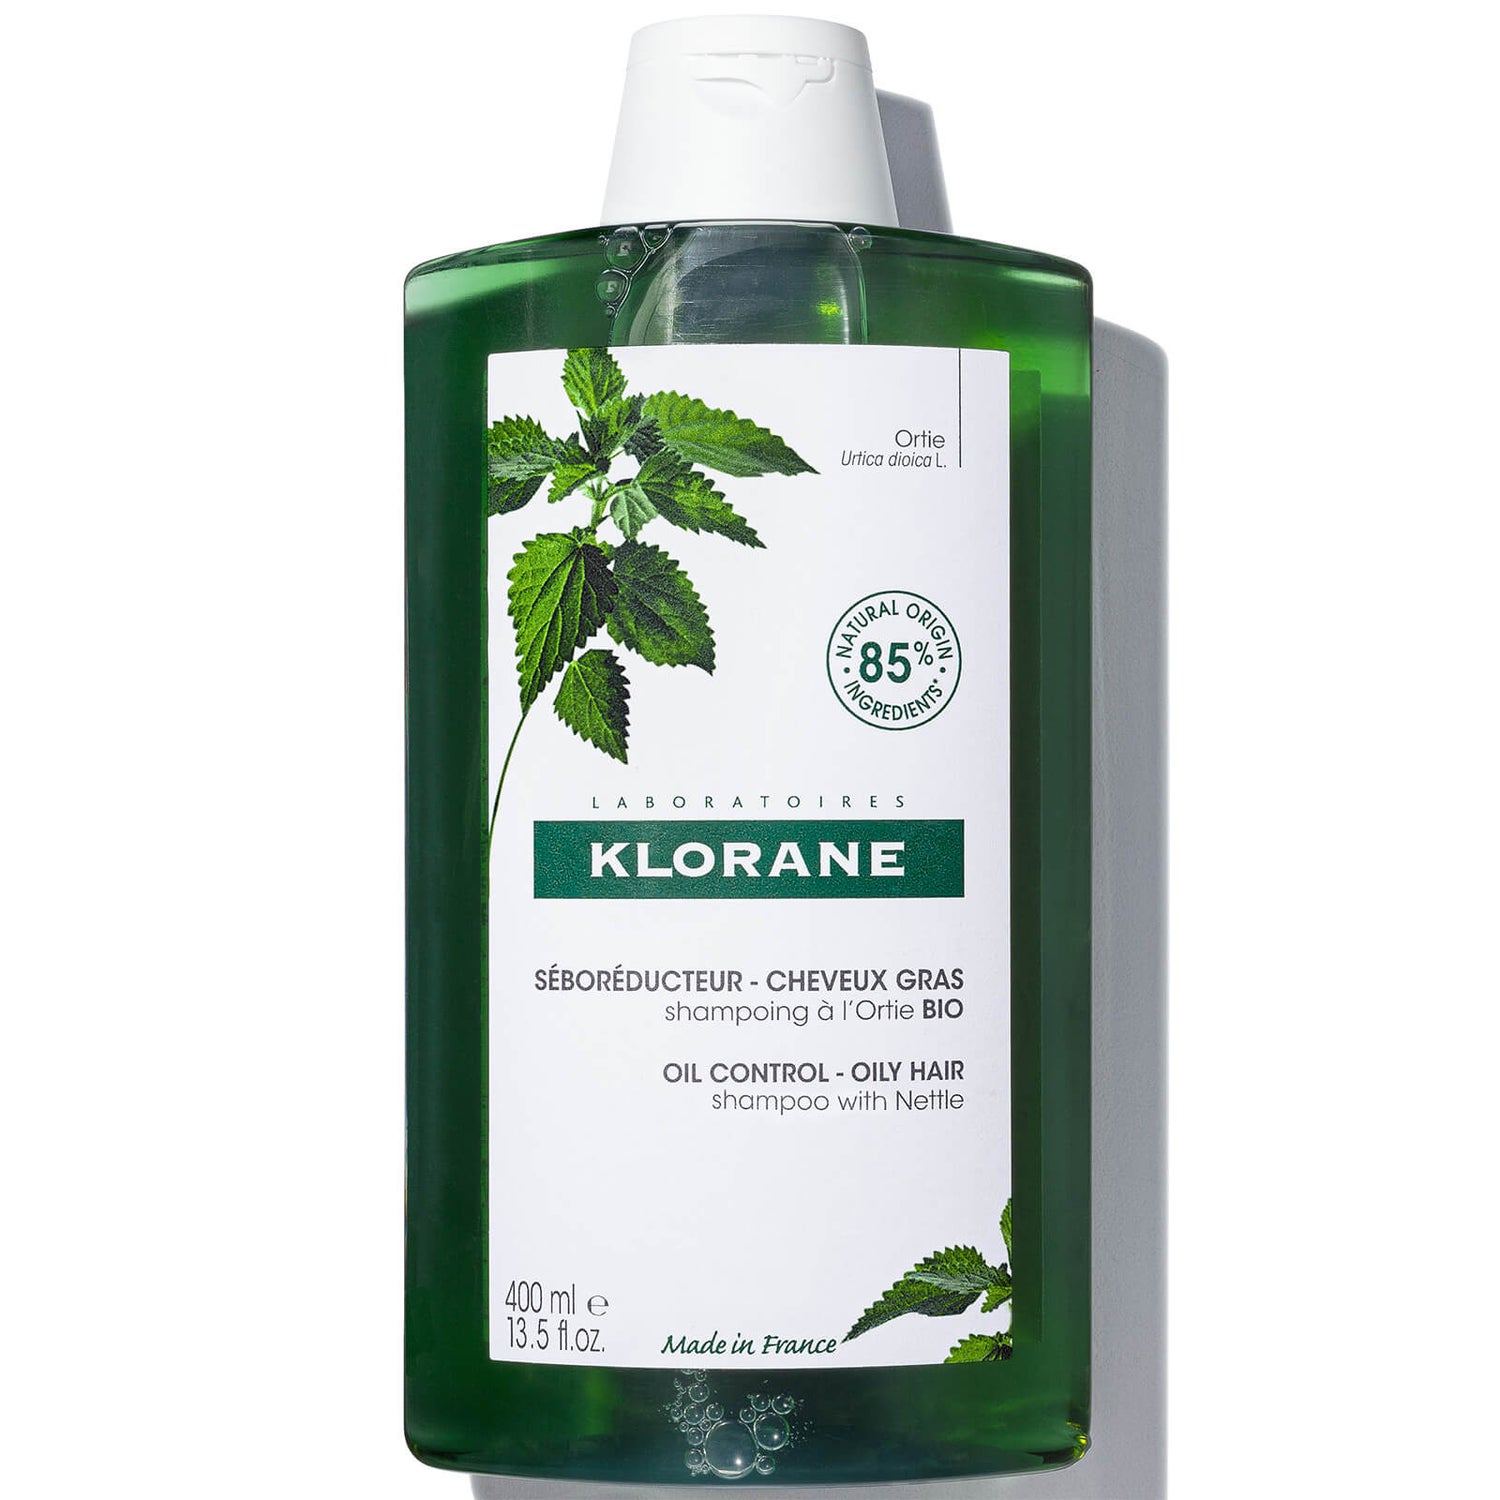 KLORANE Oil Control Shampoo with Nettle 13.5 fl. oz